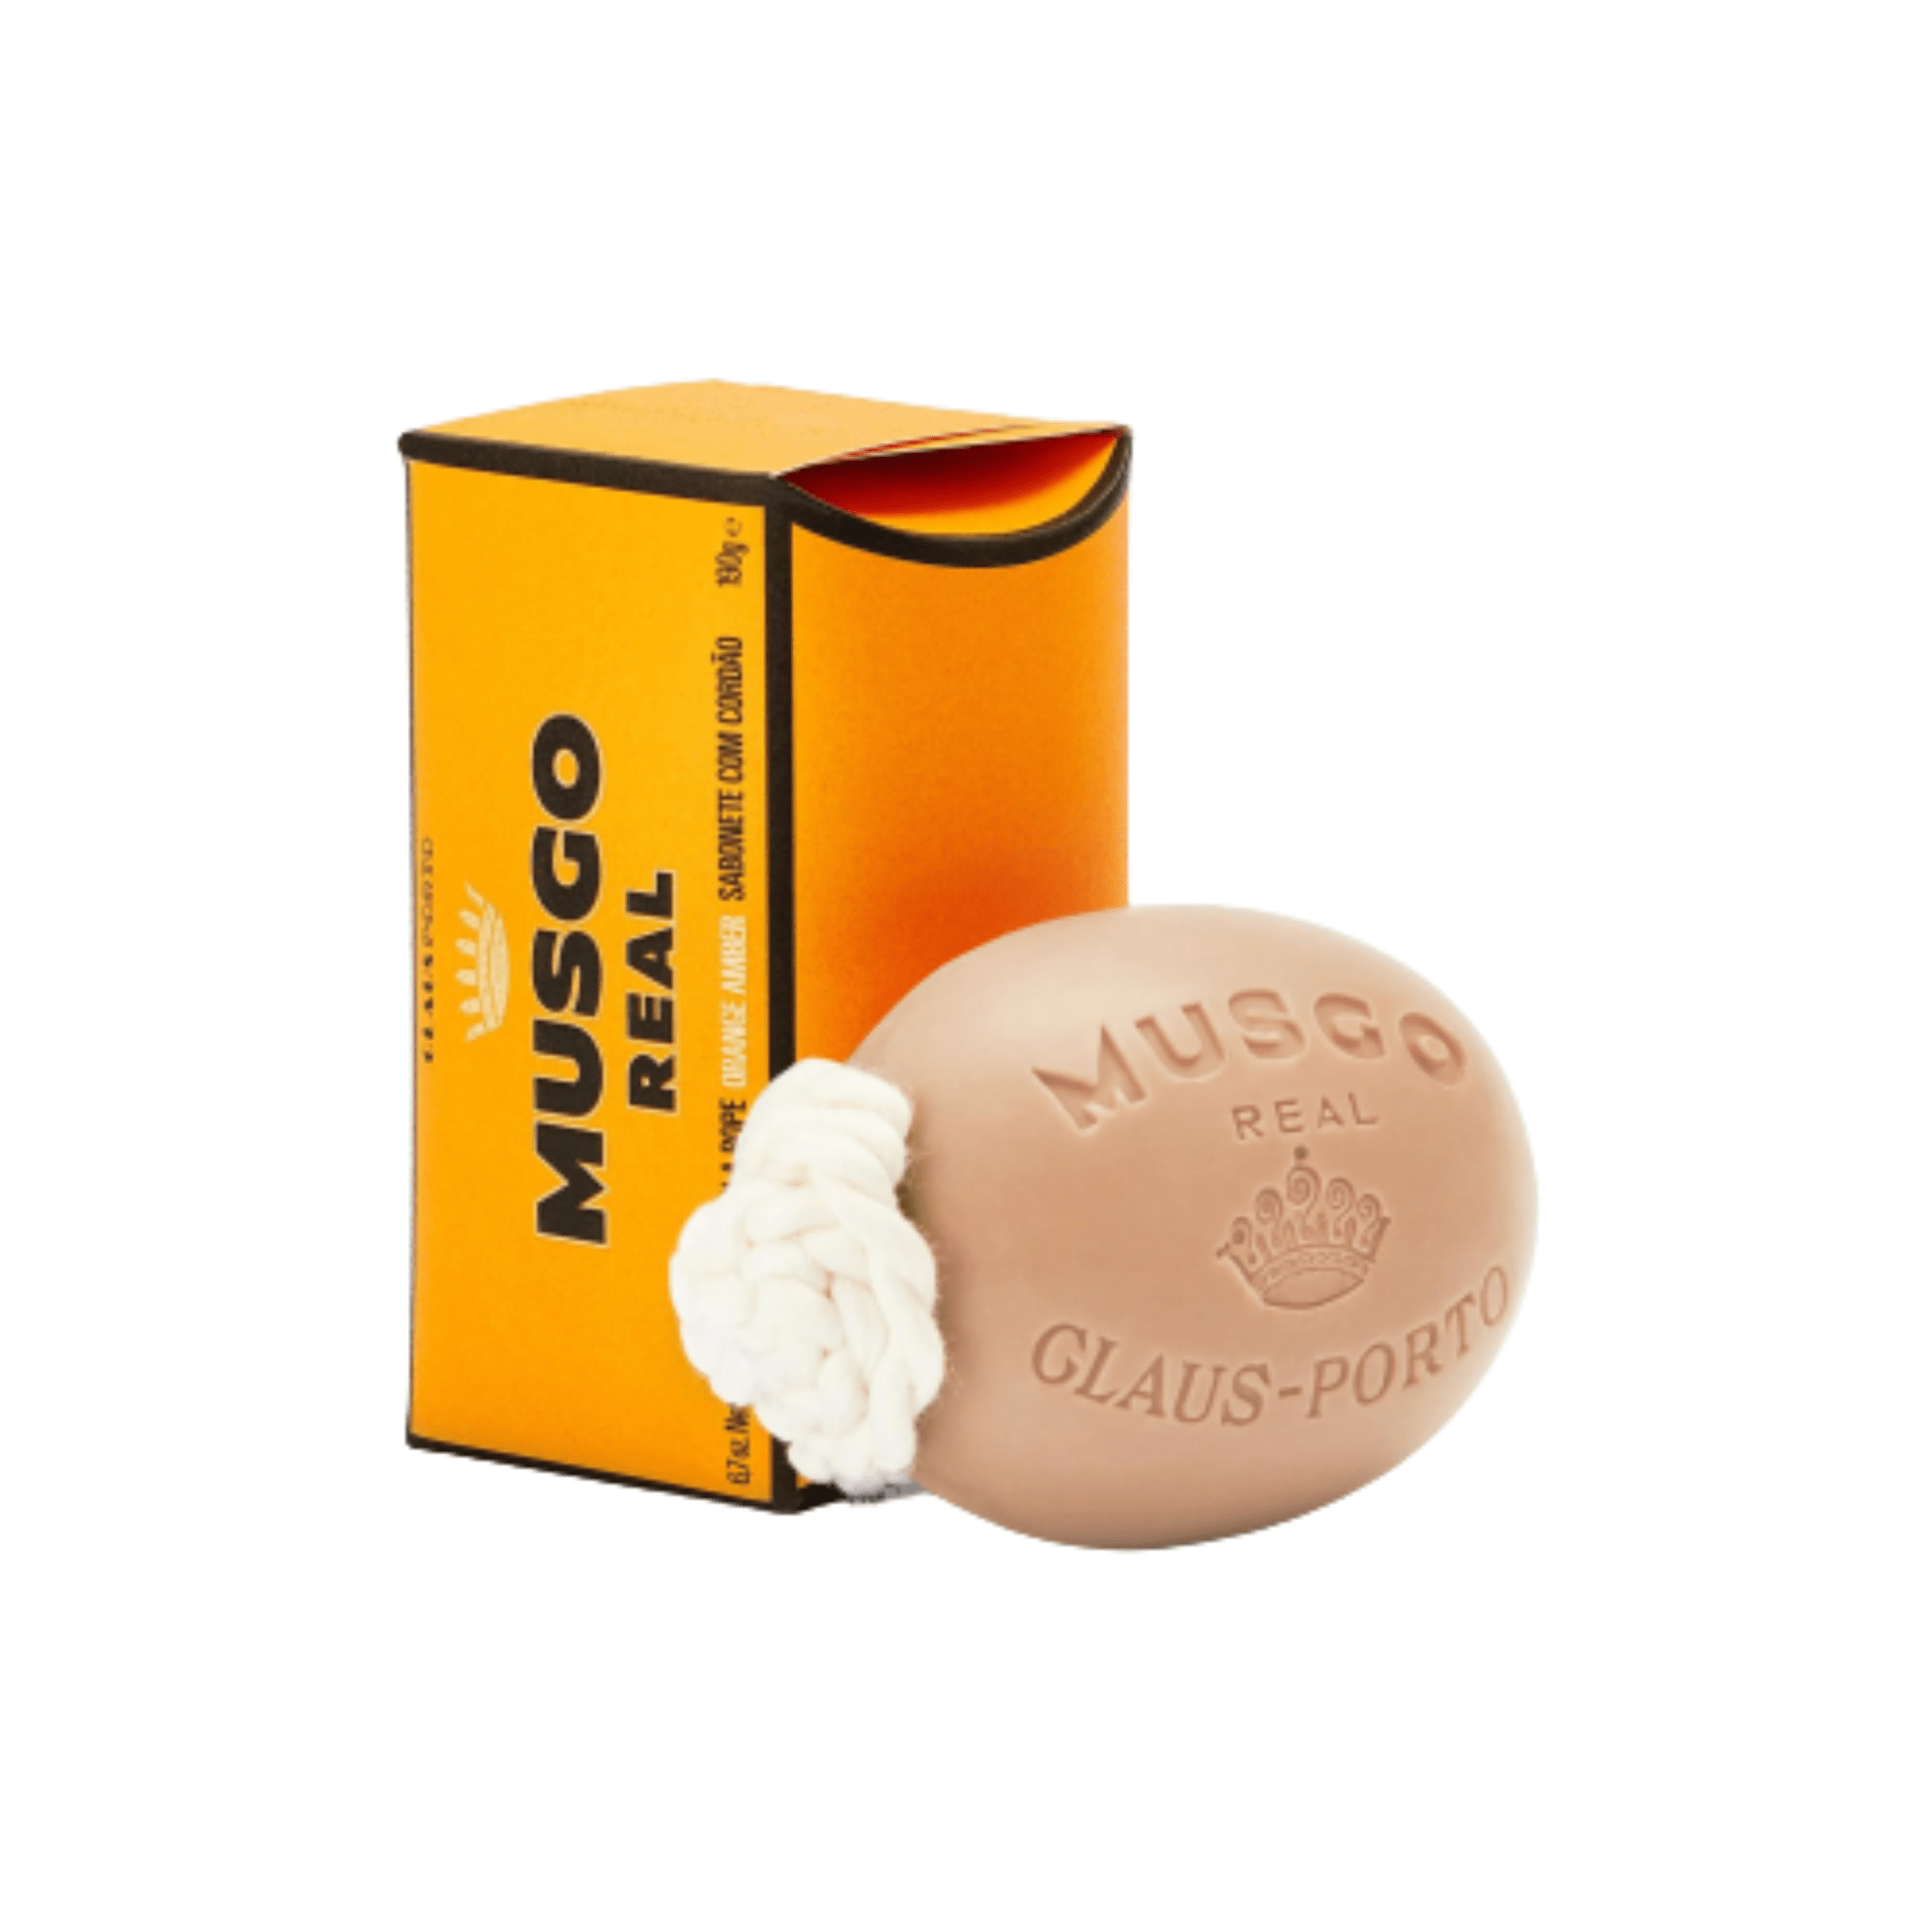 Musgo Real Orange Amber Aftershave Cologne No.1